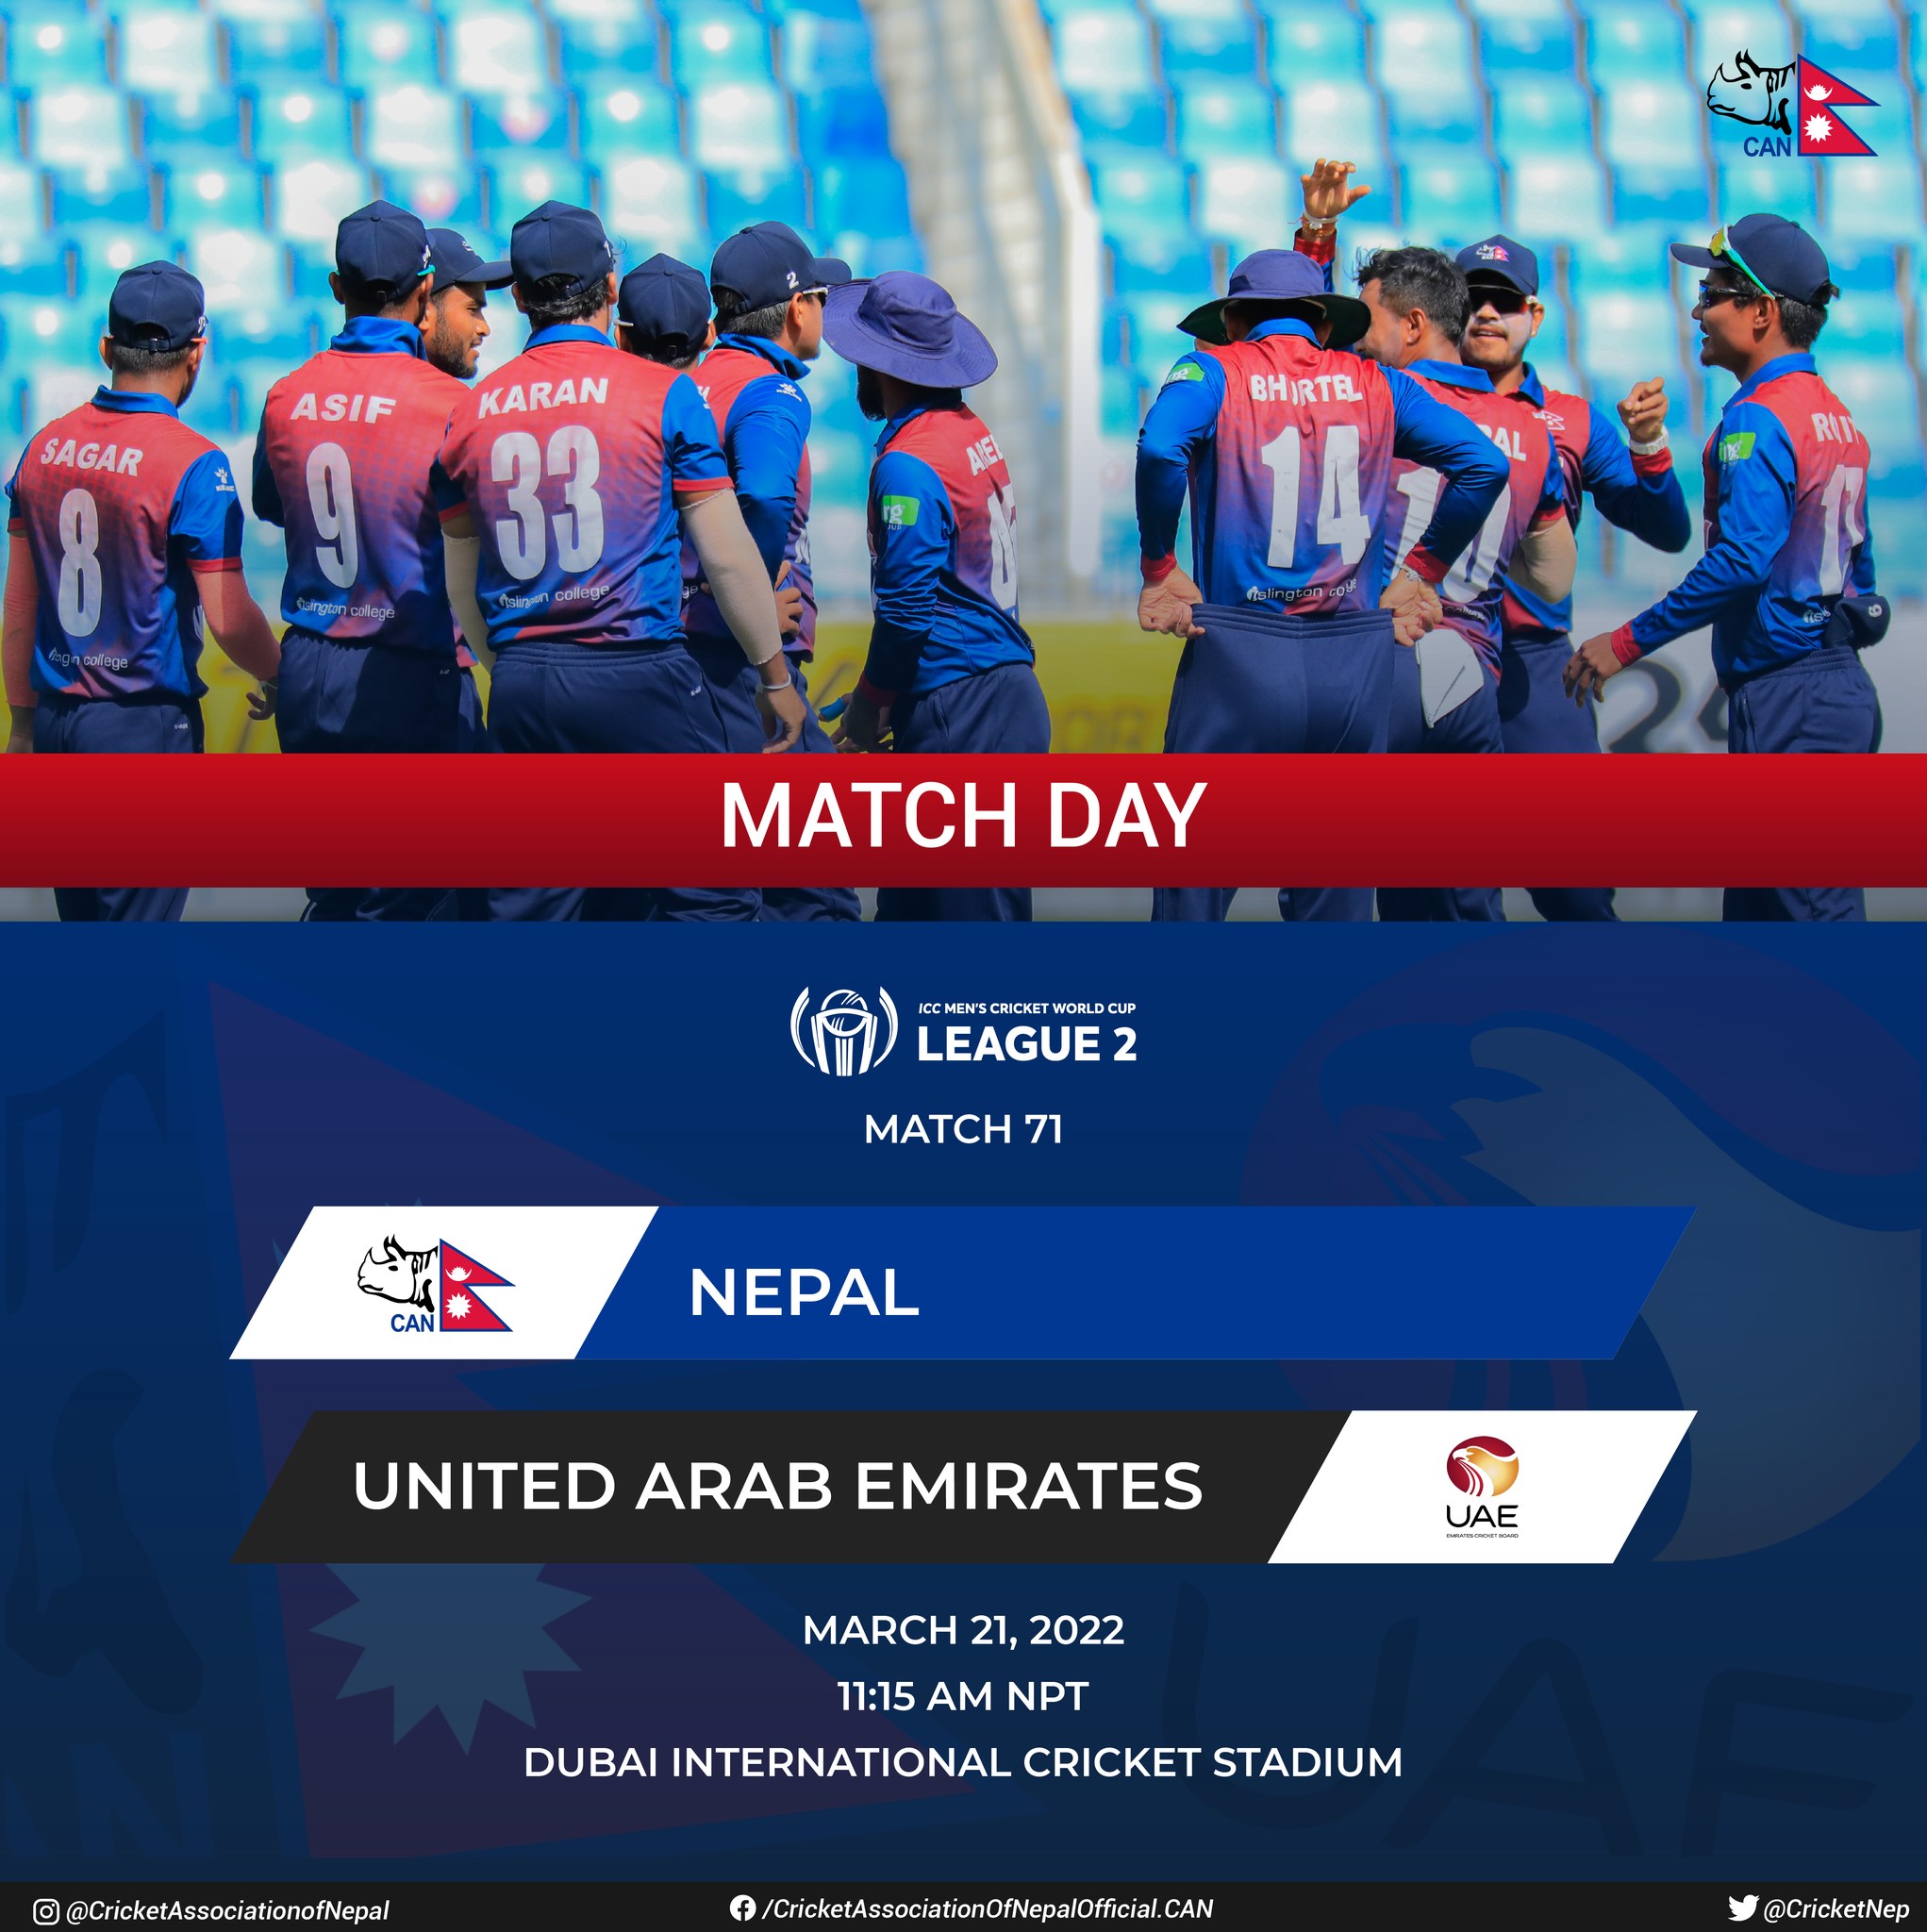 Nepal gets a target of 203 runs against UAE